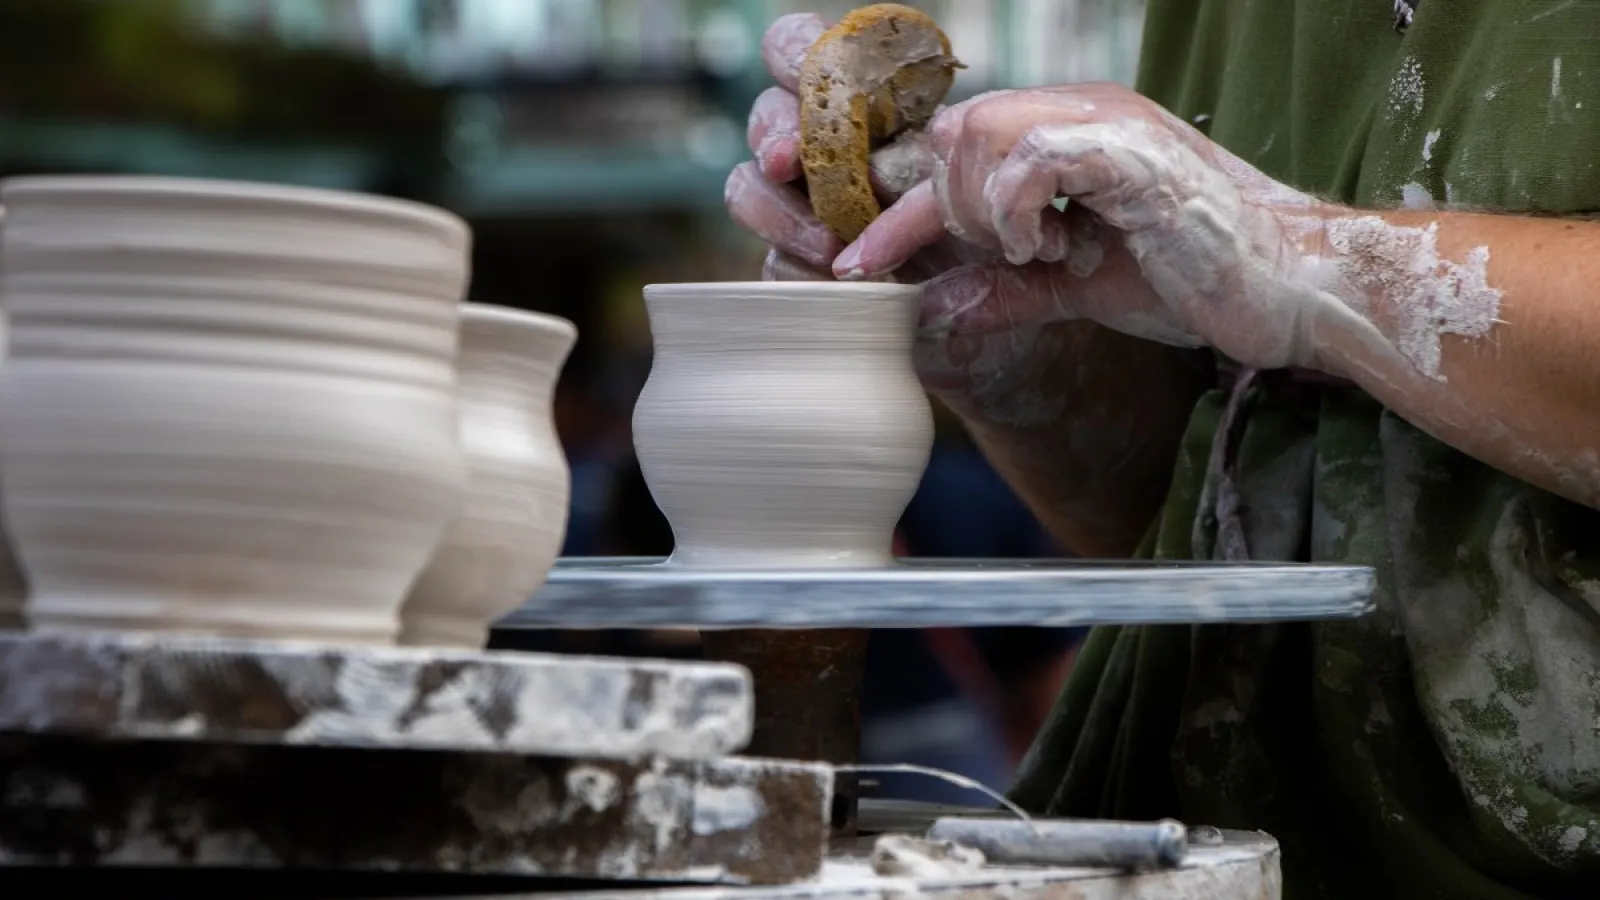 “Renaissance employee making pottery on school days” by Daphney Hernandez, Navasota HS, Feature Photo, 2nd Place